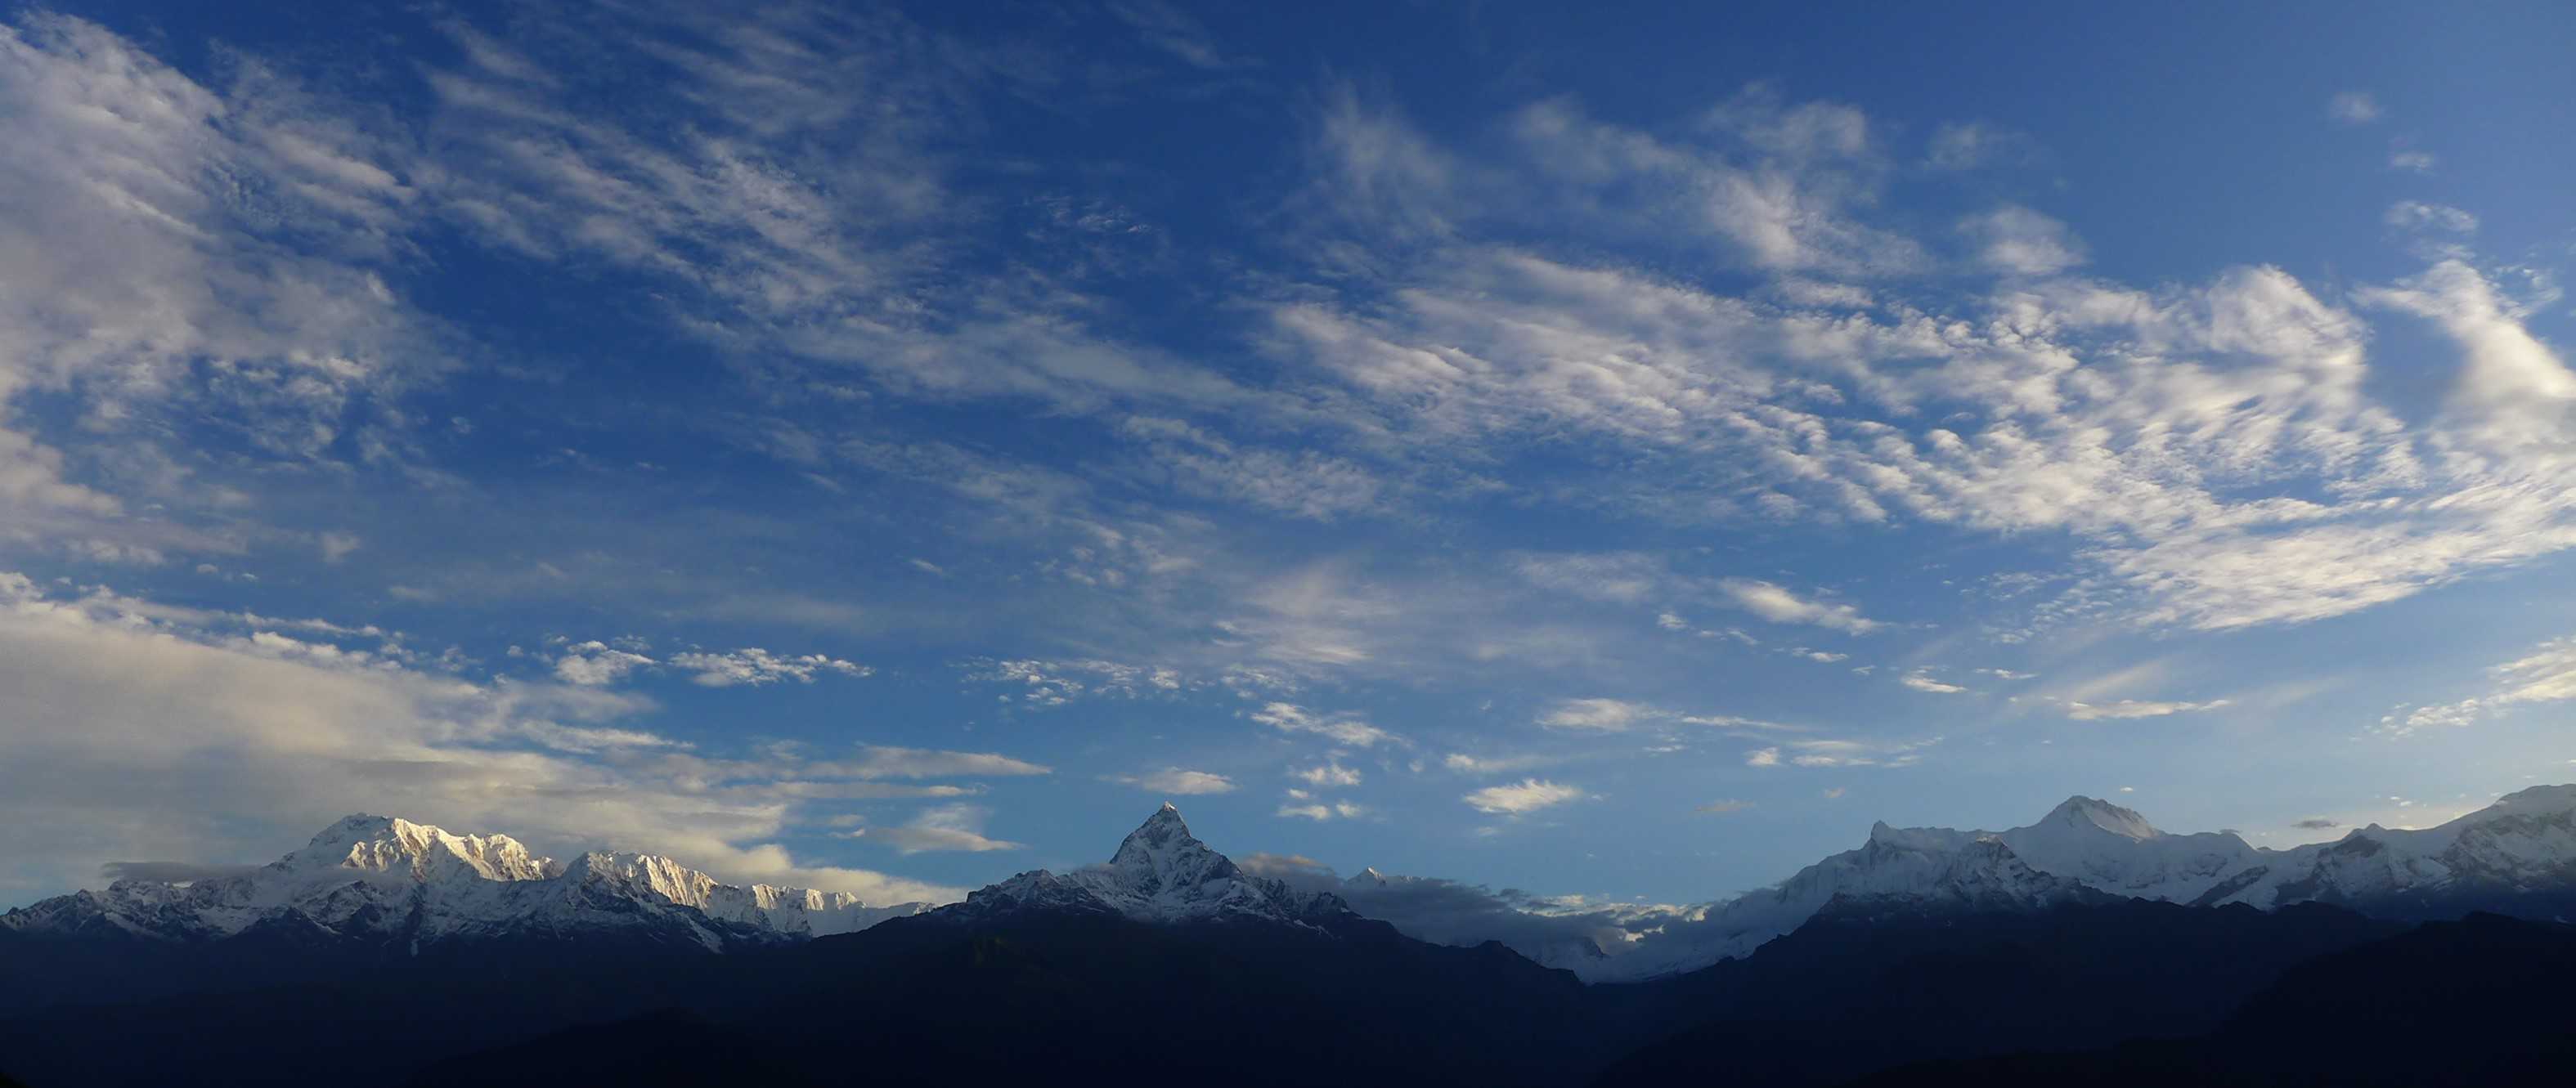 Annapurna mountain range under the cobweb cloudy sky